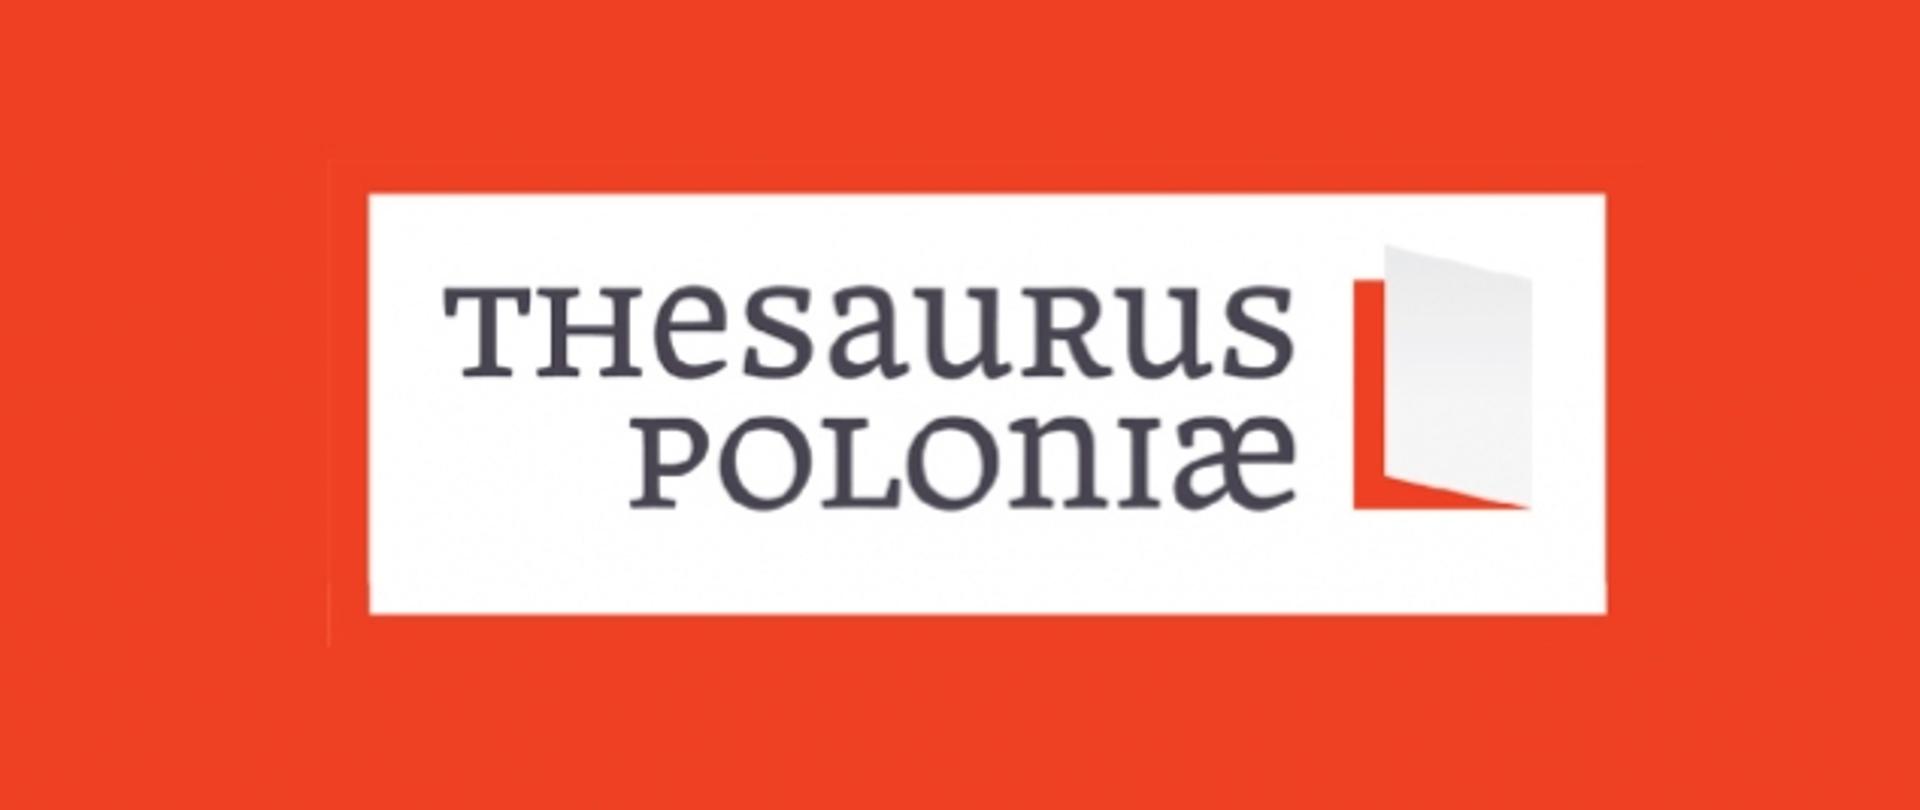 Thesaurus_Poloniae